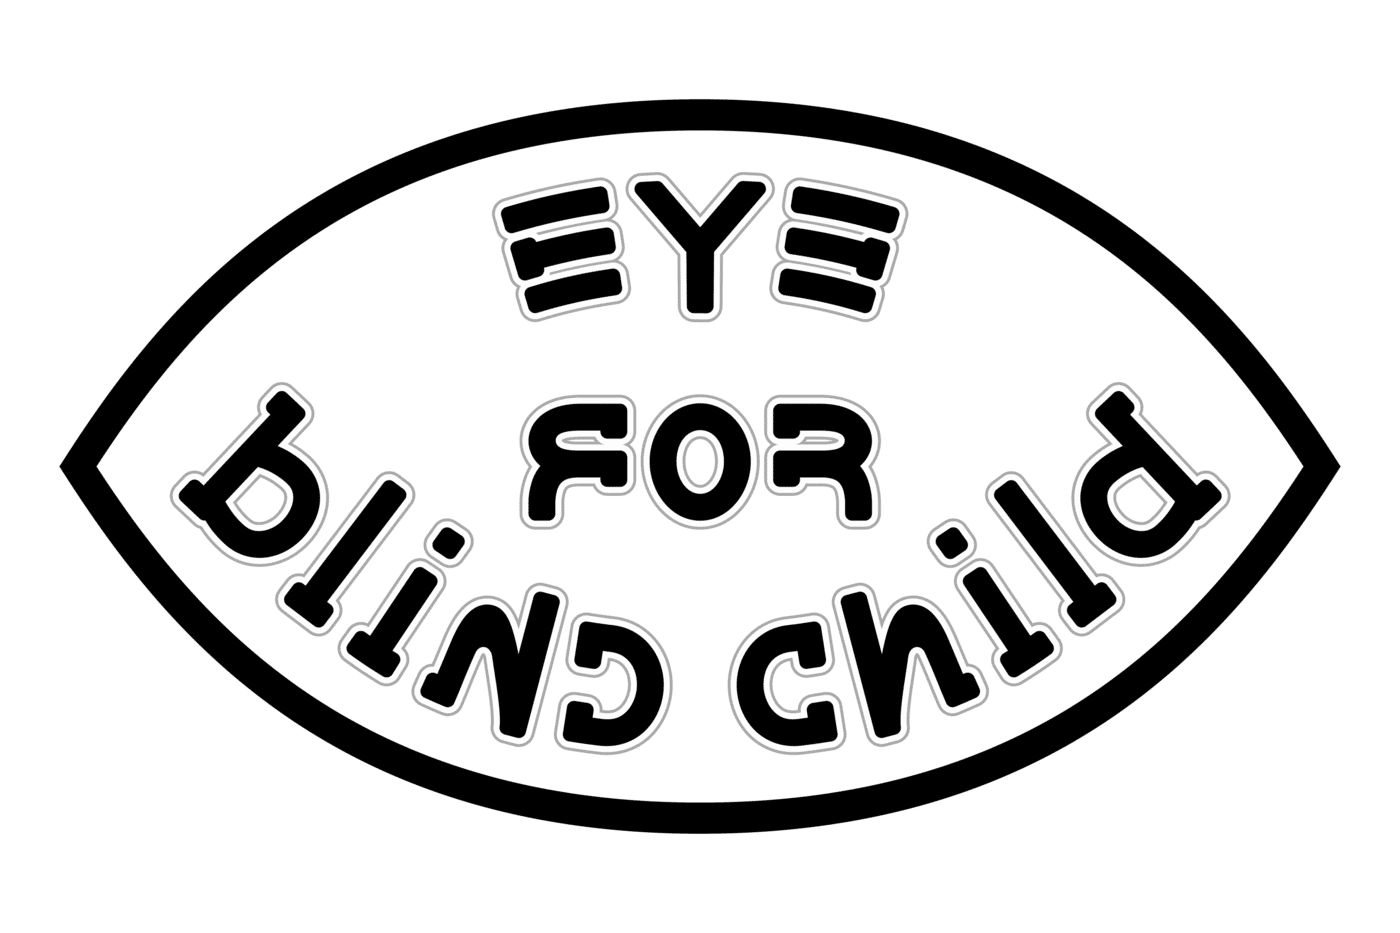 ambigram Eye for blind child